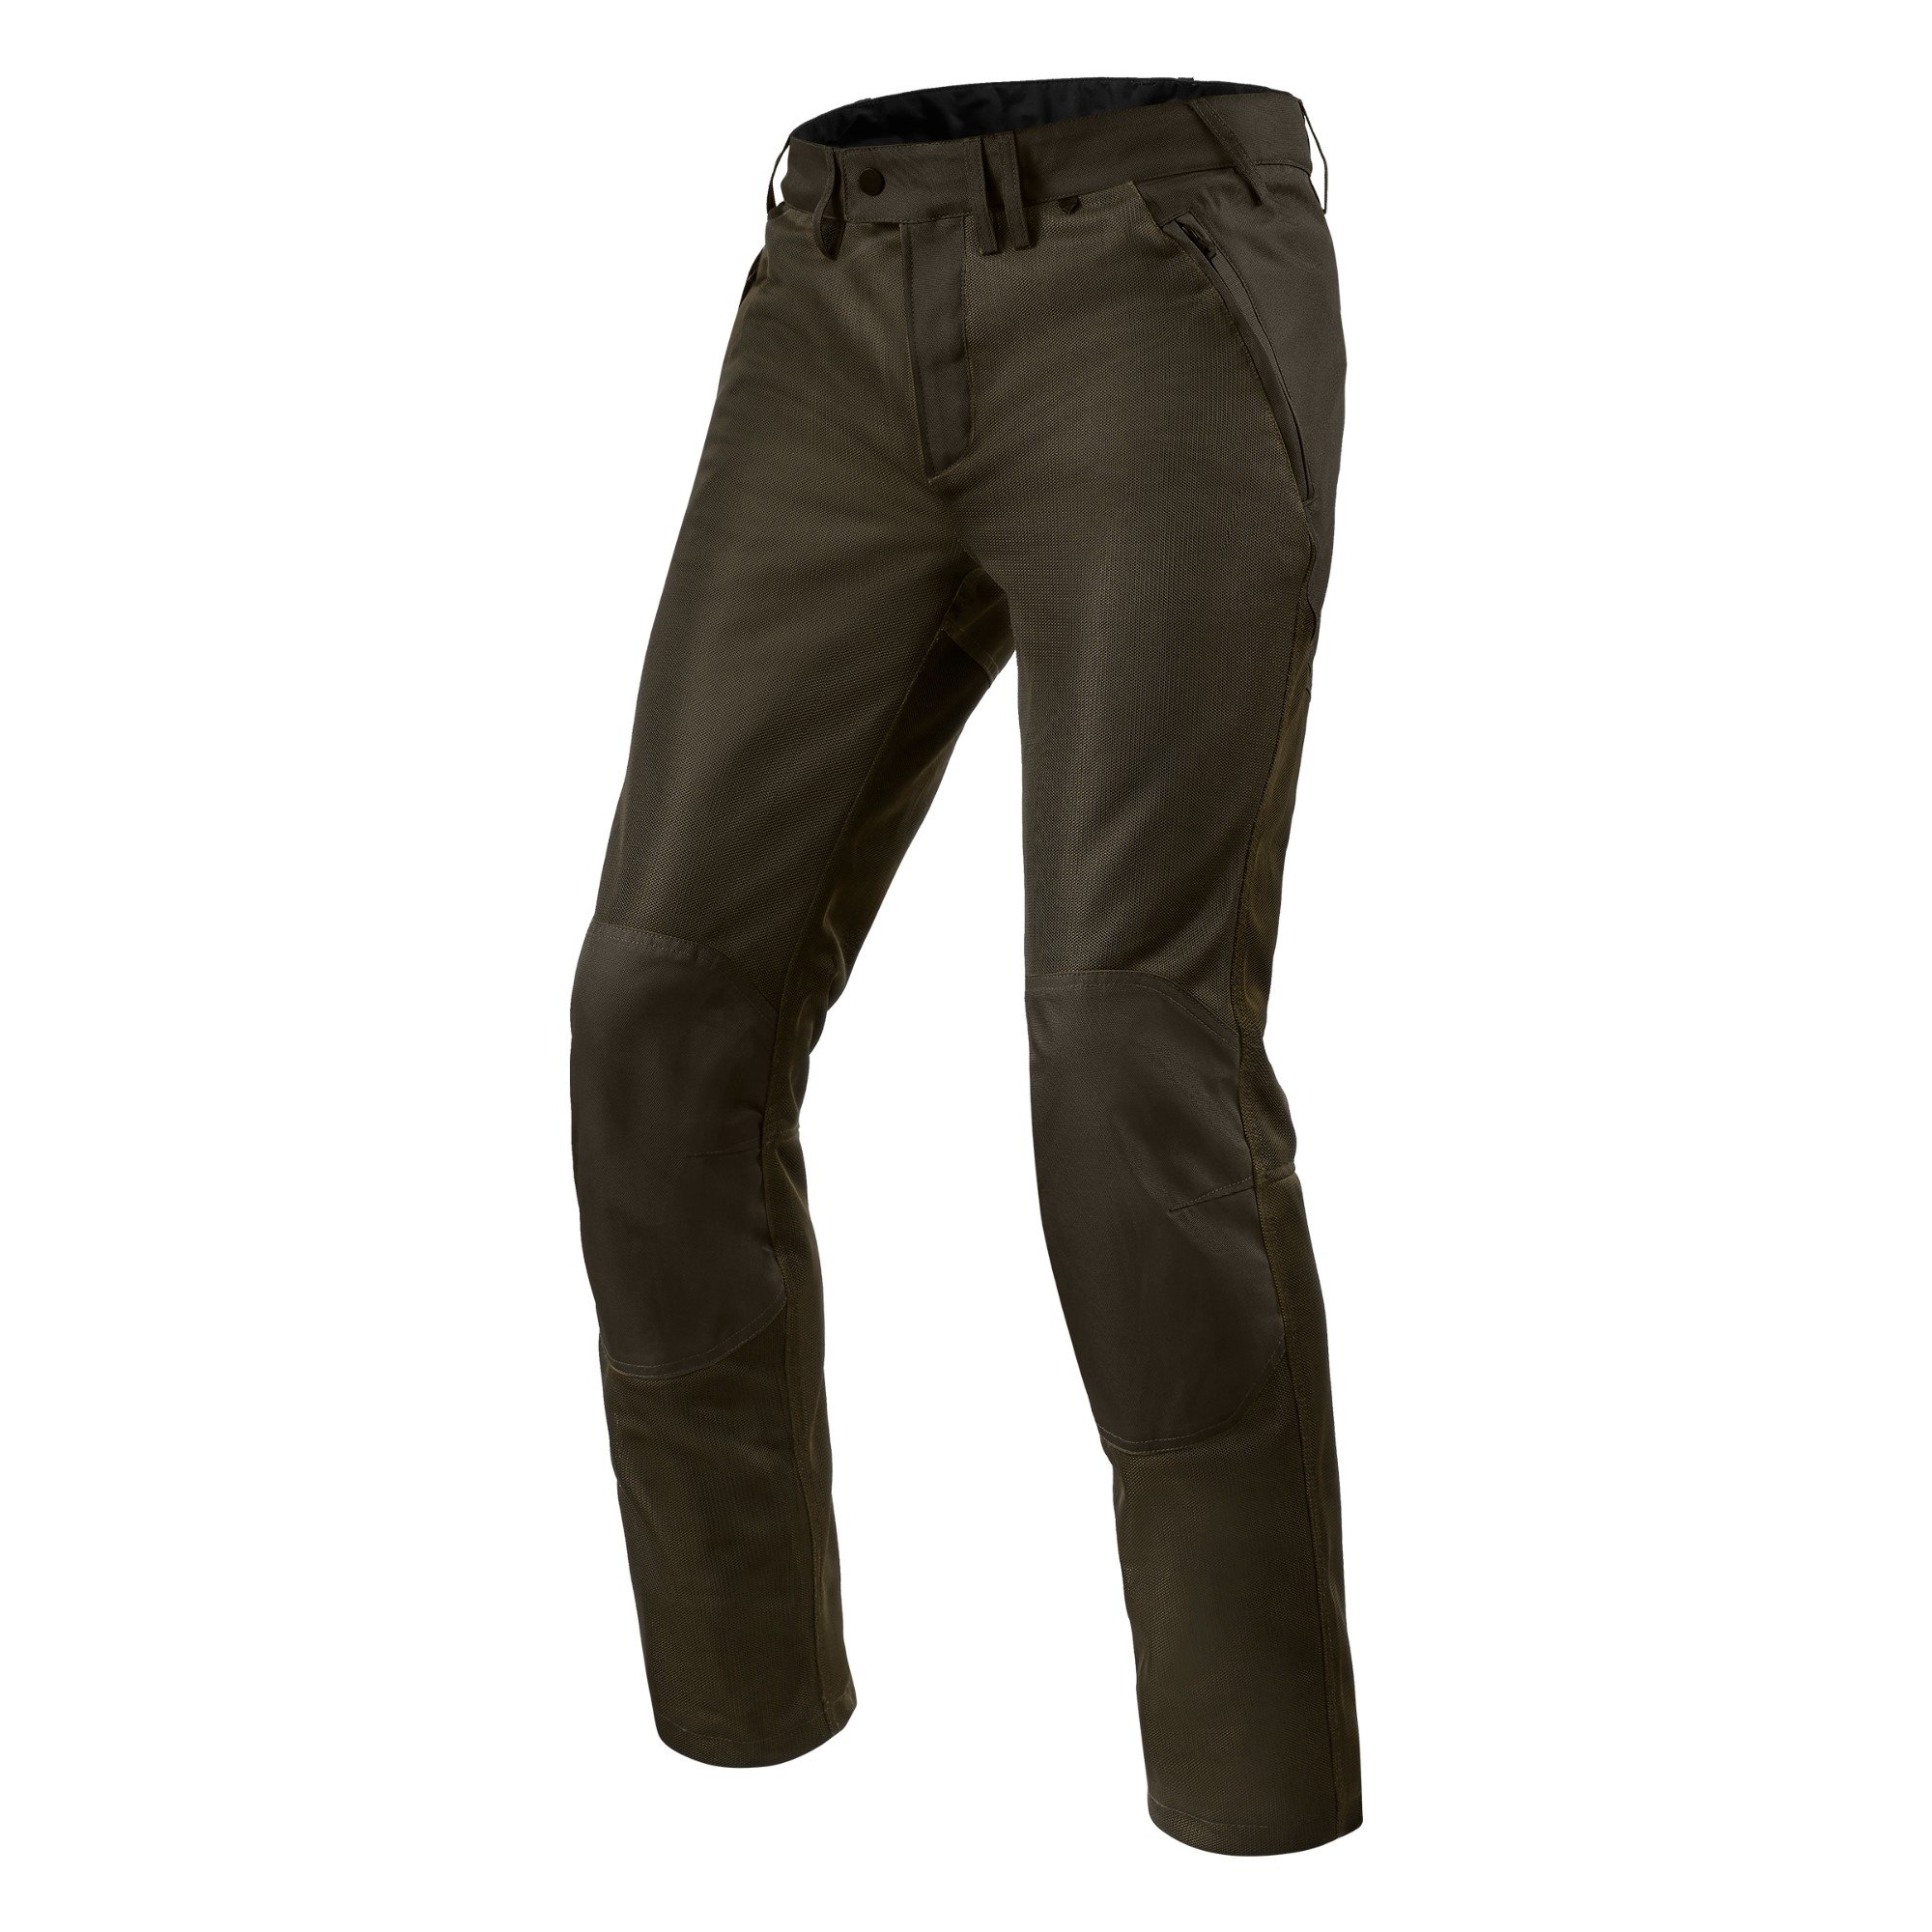 Image of REV'IT! Pants Eclipse 2 Black Olive Standard Motorcycle Pants Size M ID 8700001368728